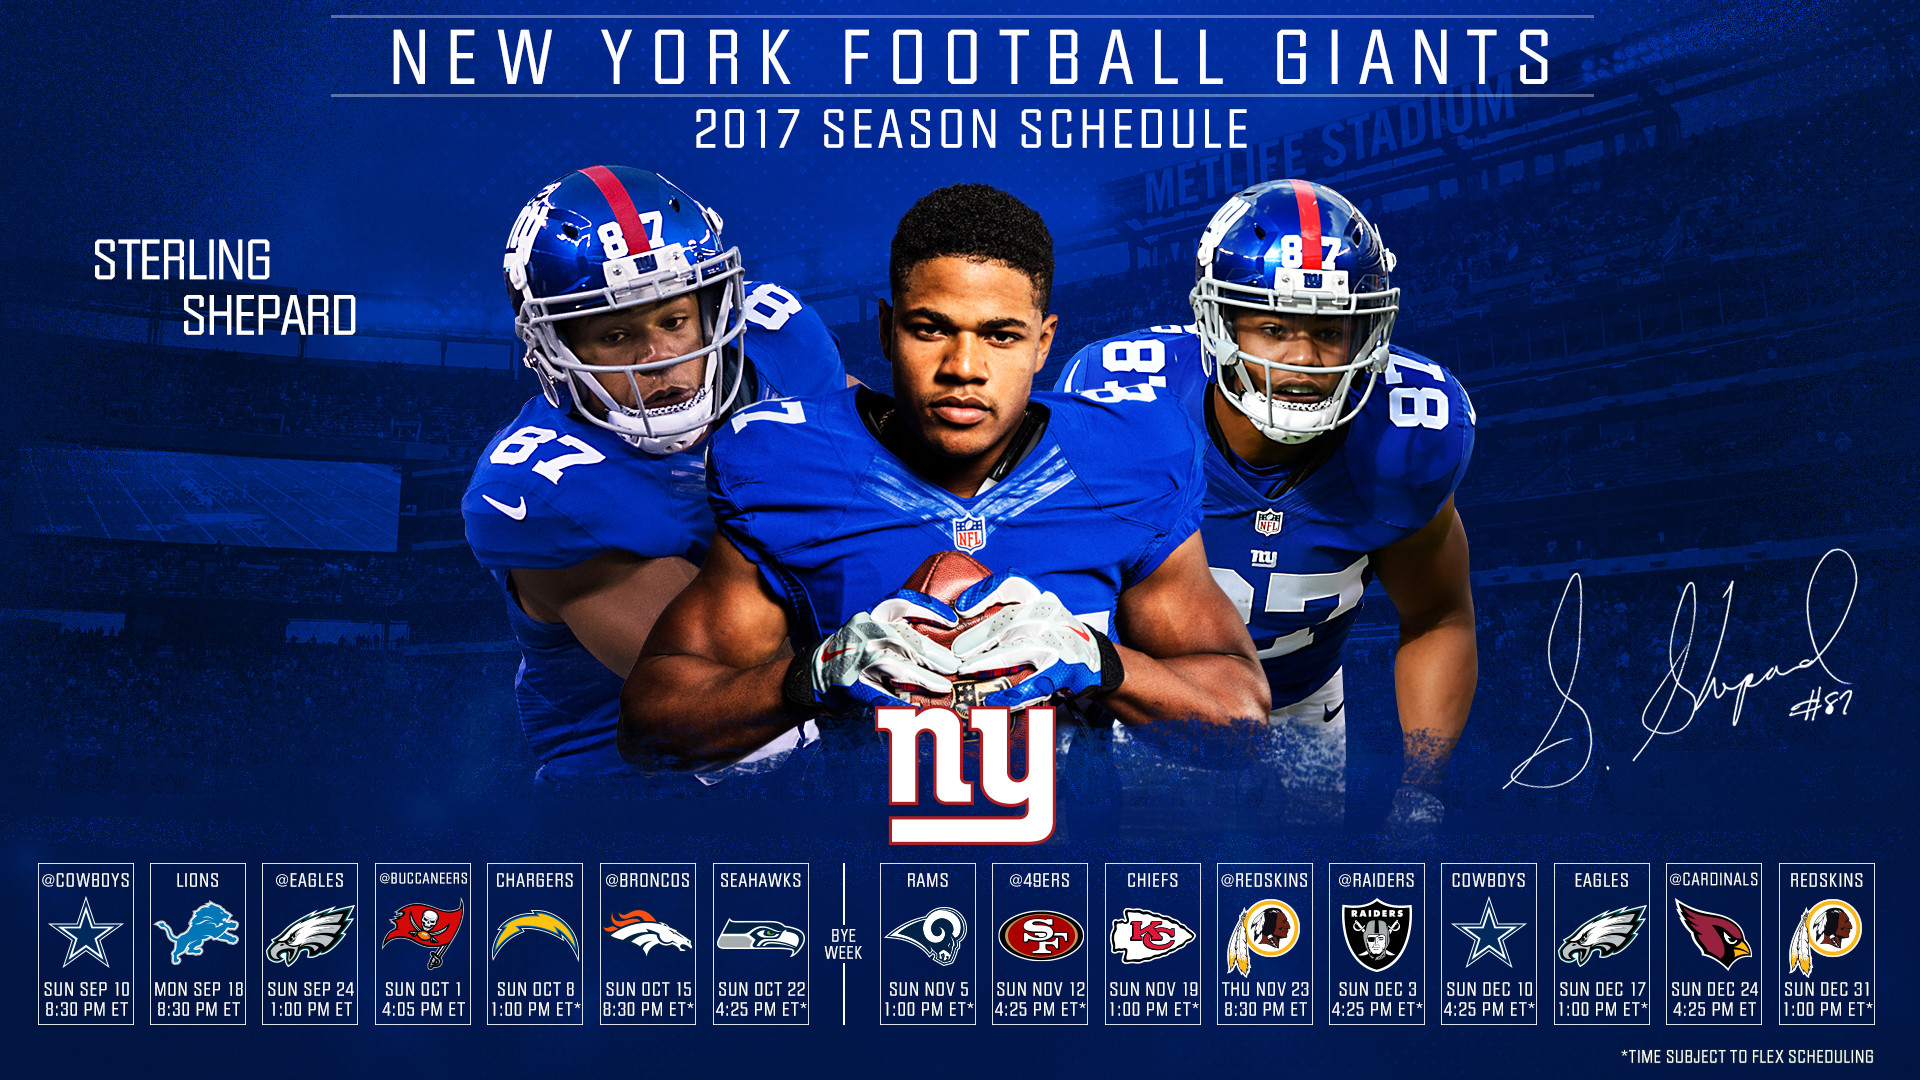 Click one of the thumbnails below to download the New York Giants 2017 schedule desktop wallpaper. For desktop wallpapers, right click on the image and